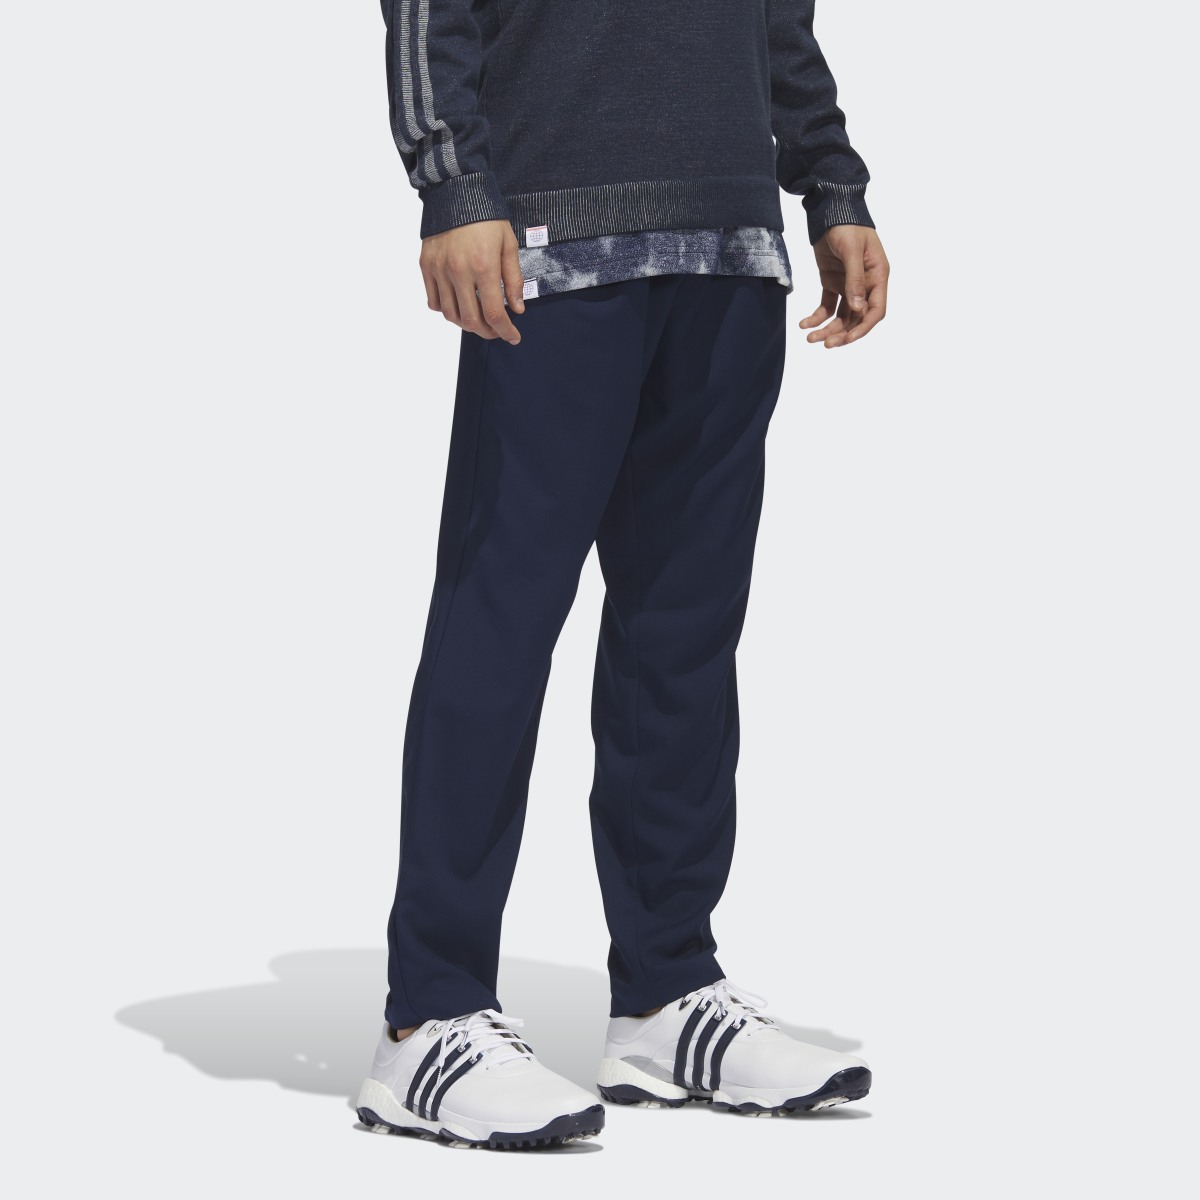 Adidas Made To Be Remade Pintuck Golf Pants. 4